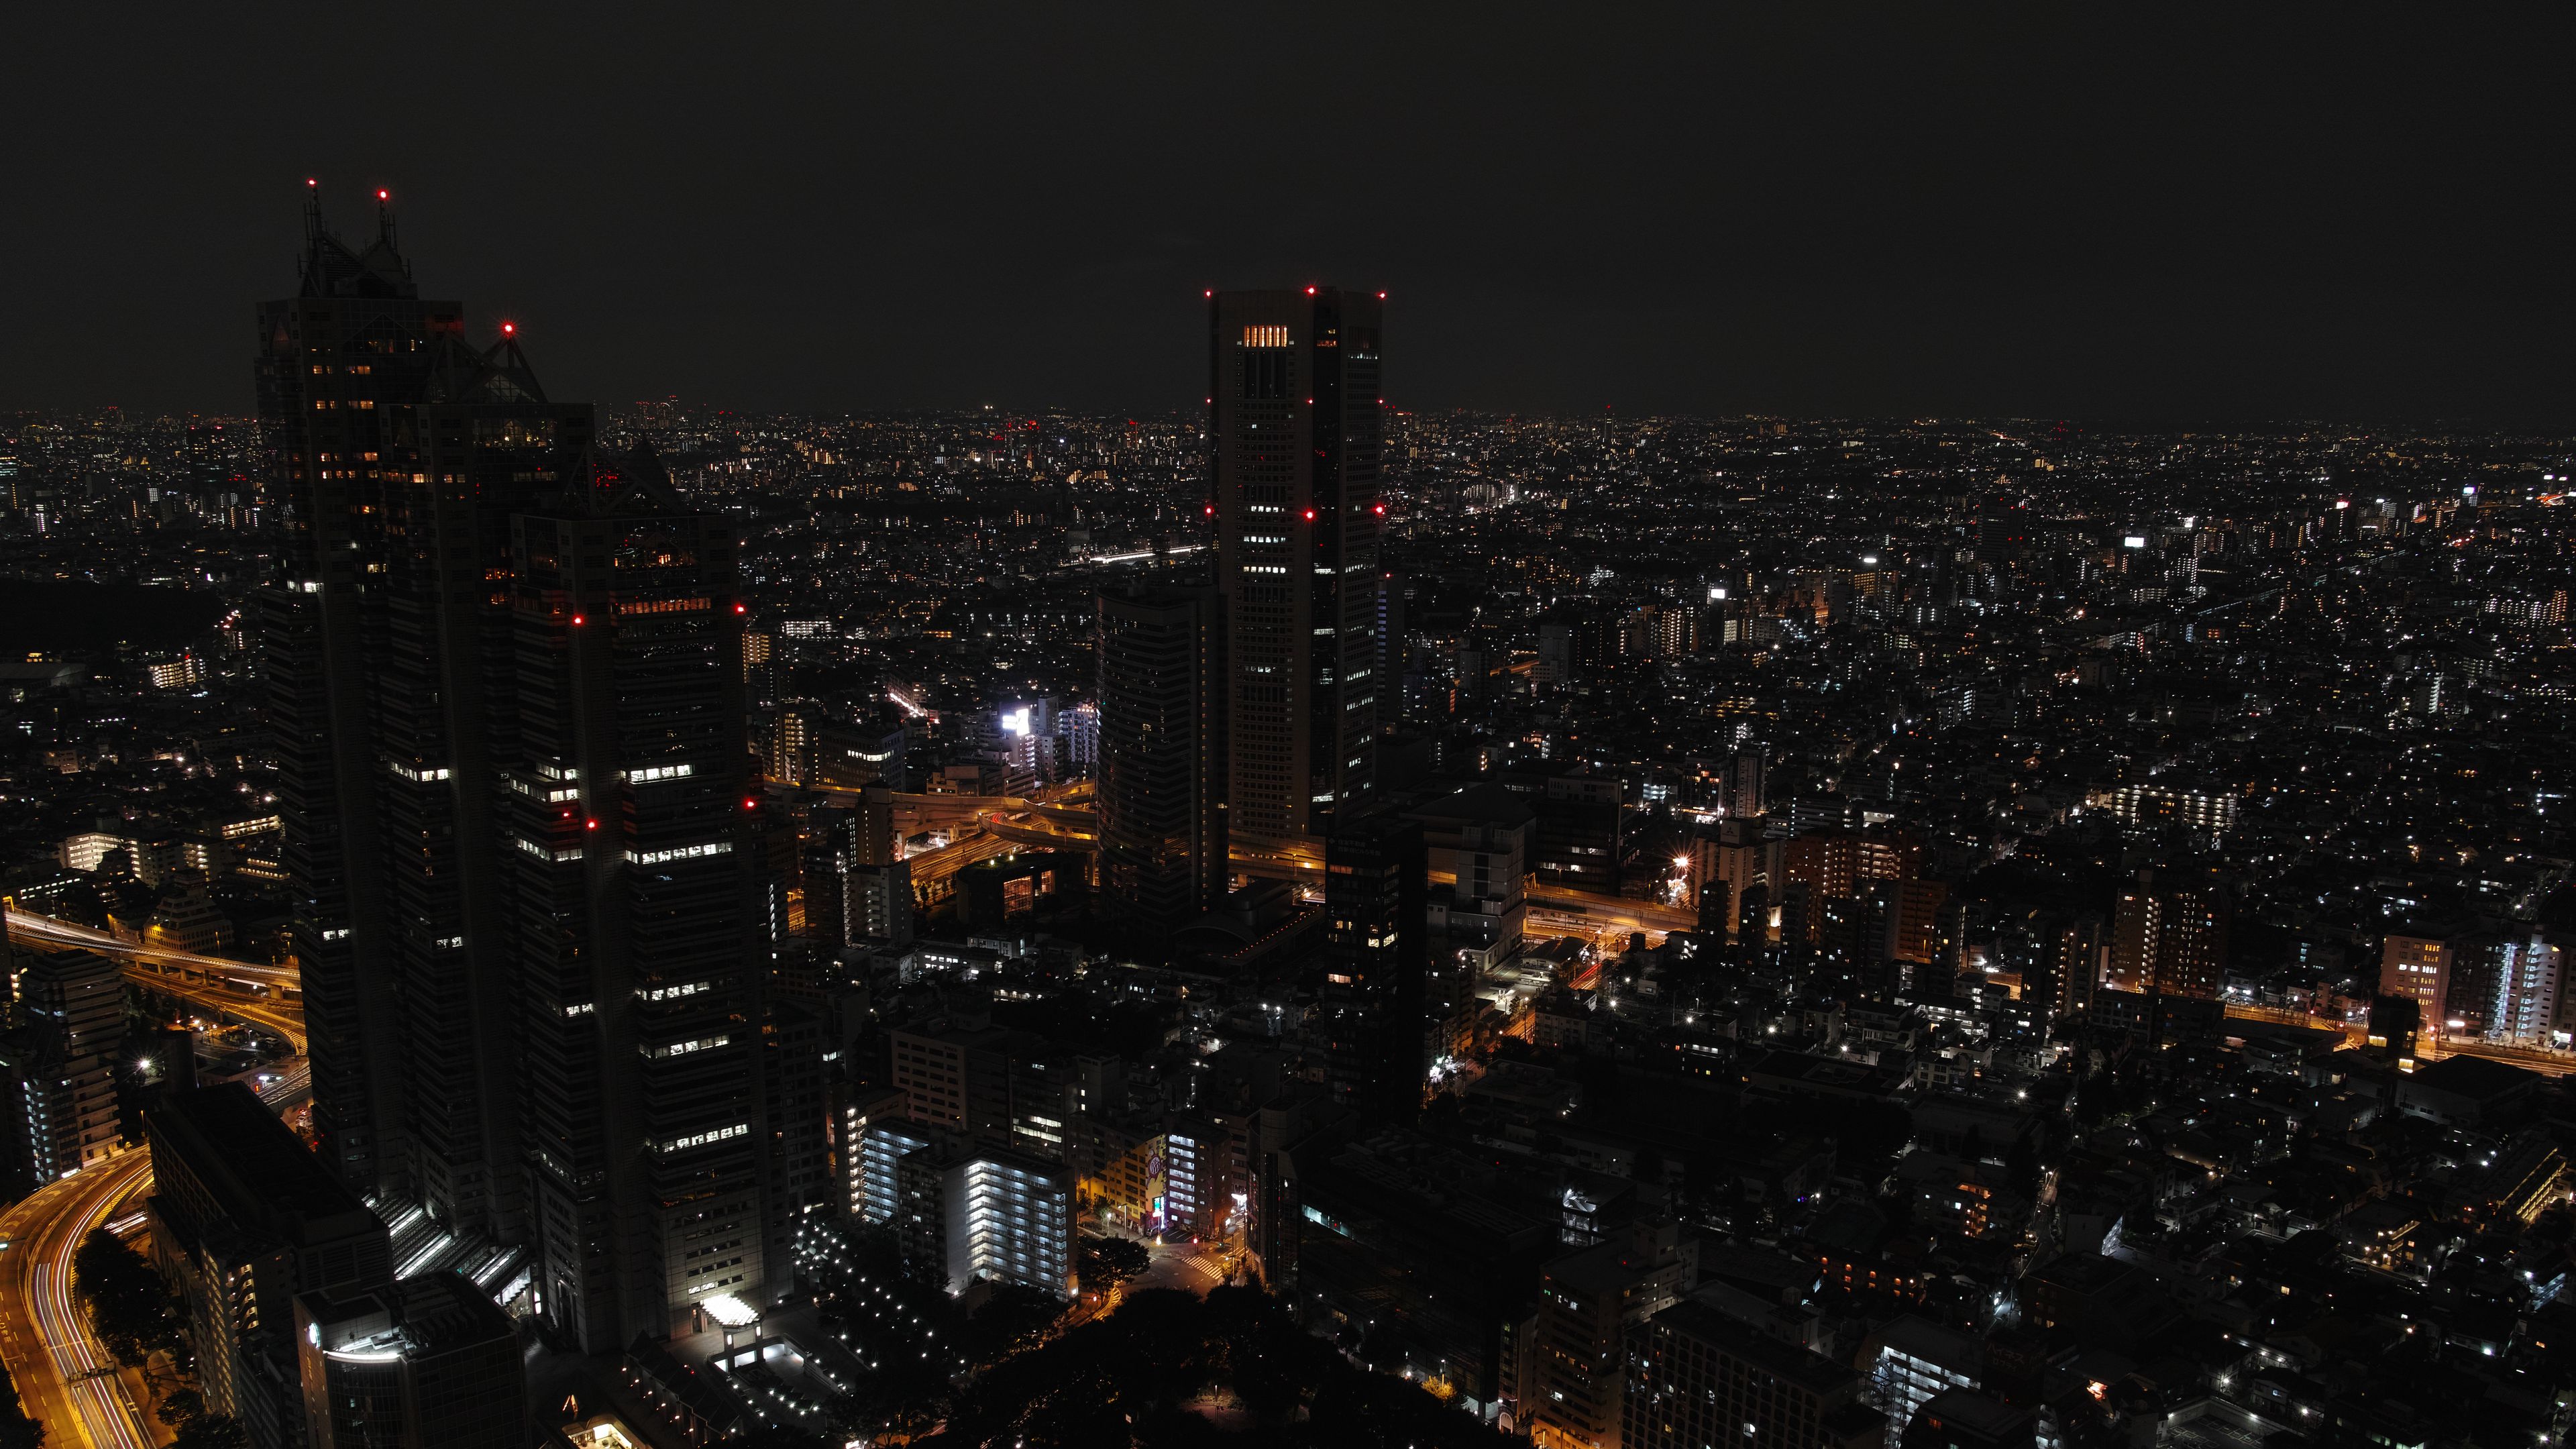 Download wallpaper 3840x2160 night city, skyscrapers, tokyo, night 4k uhd 16:9 HD background